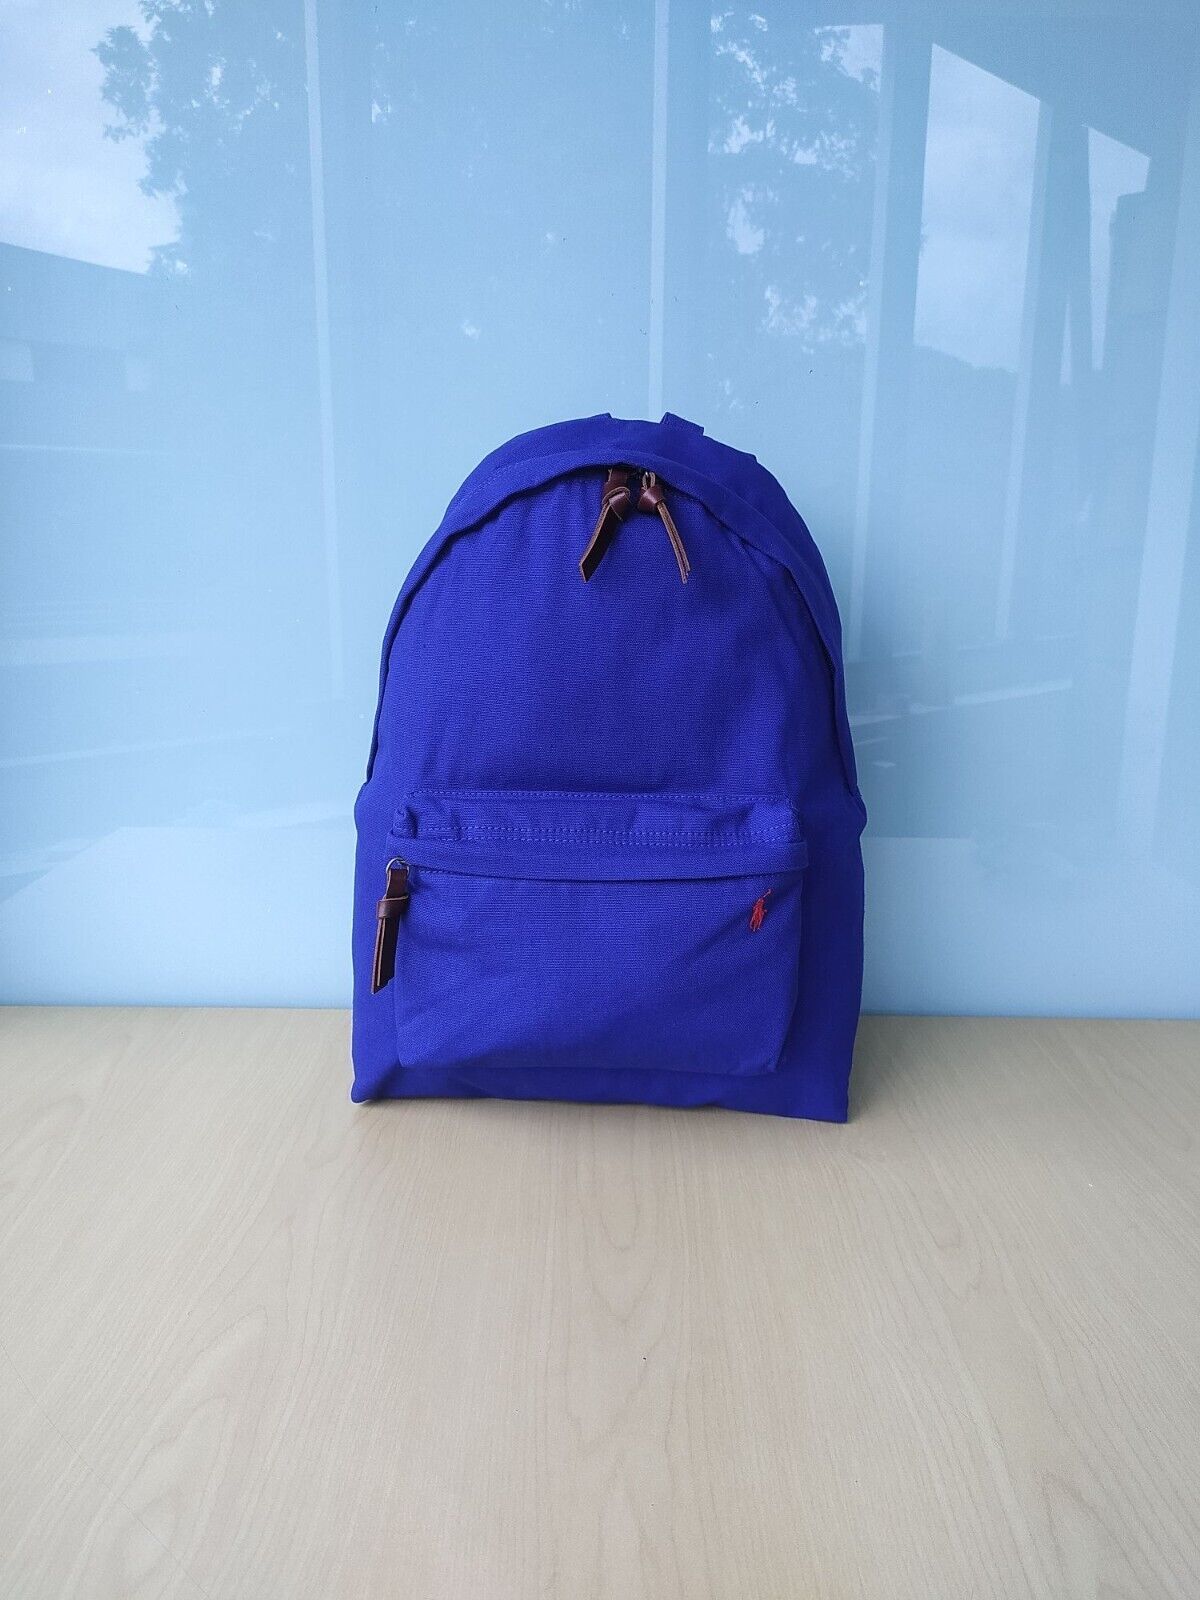 Polo Ralph Lauren Blue Canvas Backpack  WORLDWIDE SHIPPING - $148.91